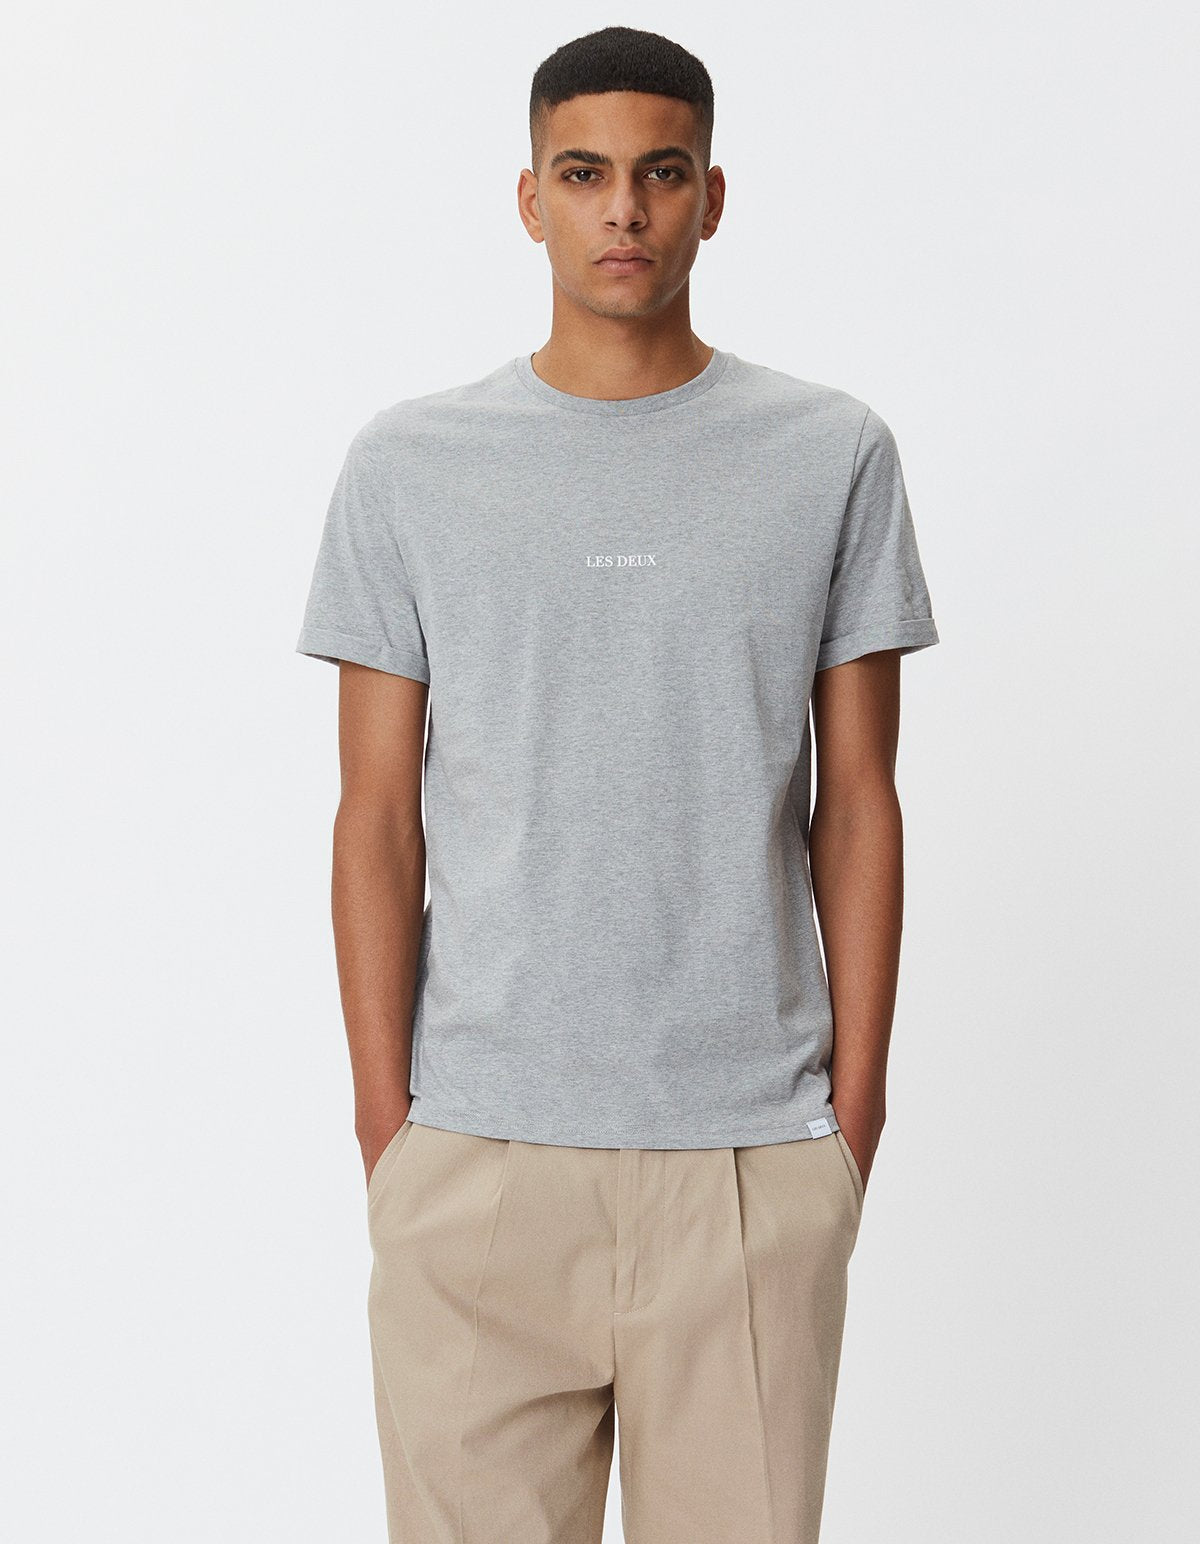 Les Deux Lens T-Shirt Lighte Grey Melange/White TWOJAYS